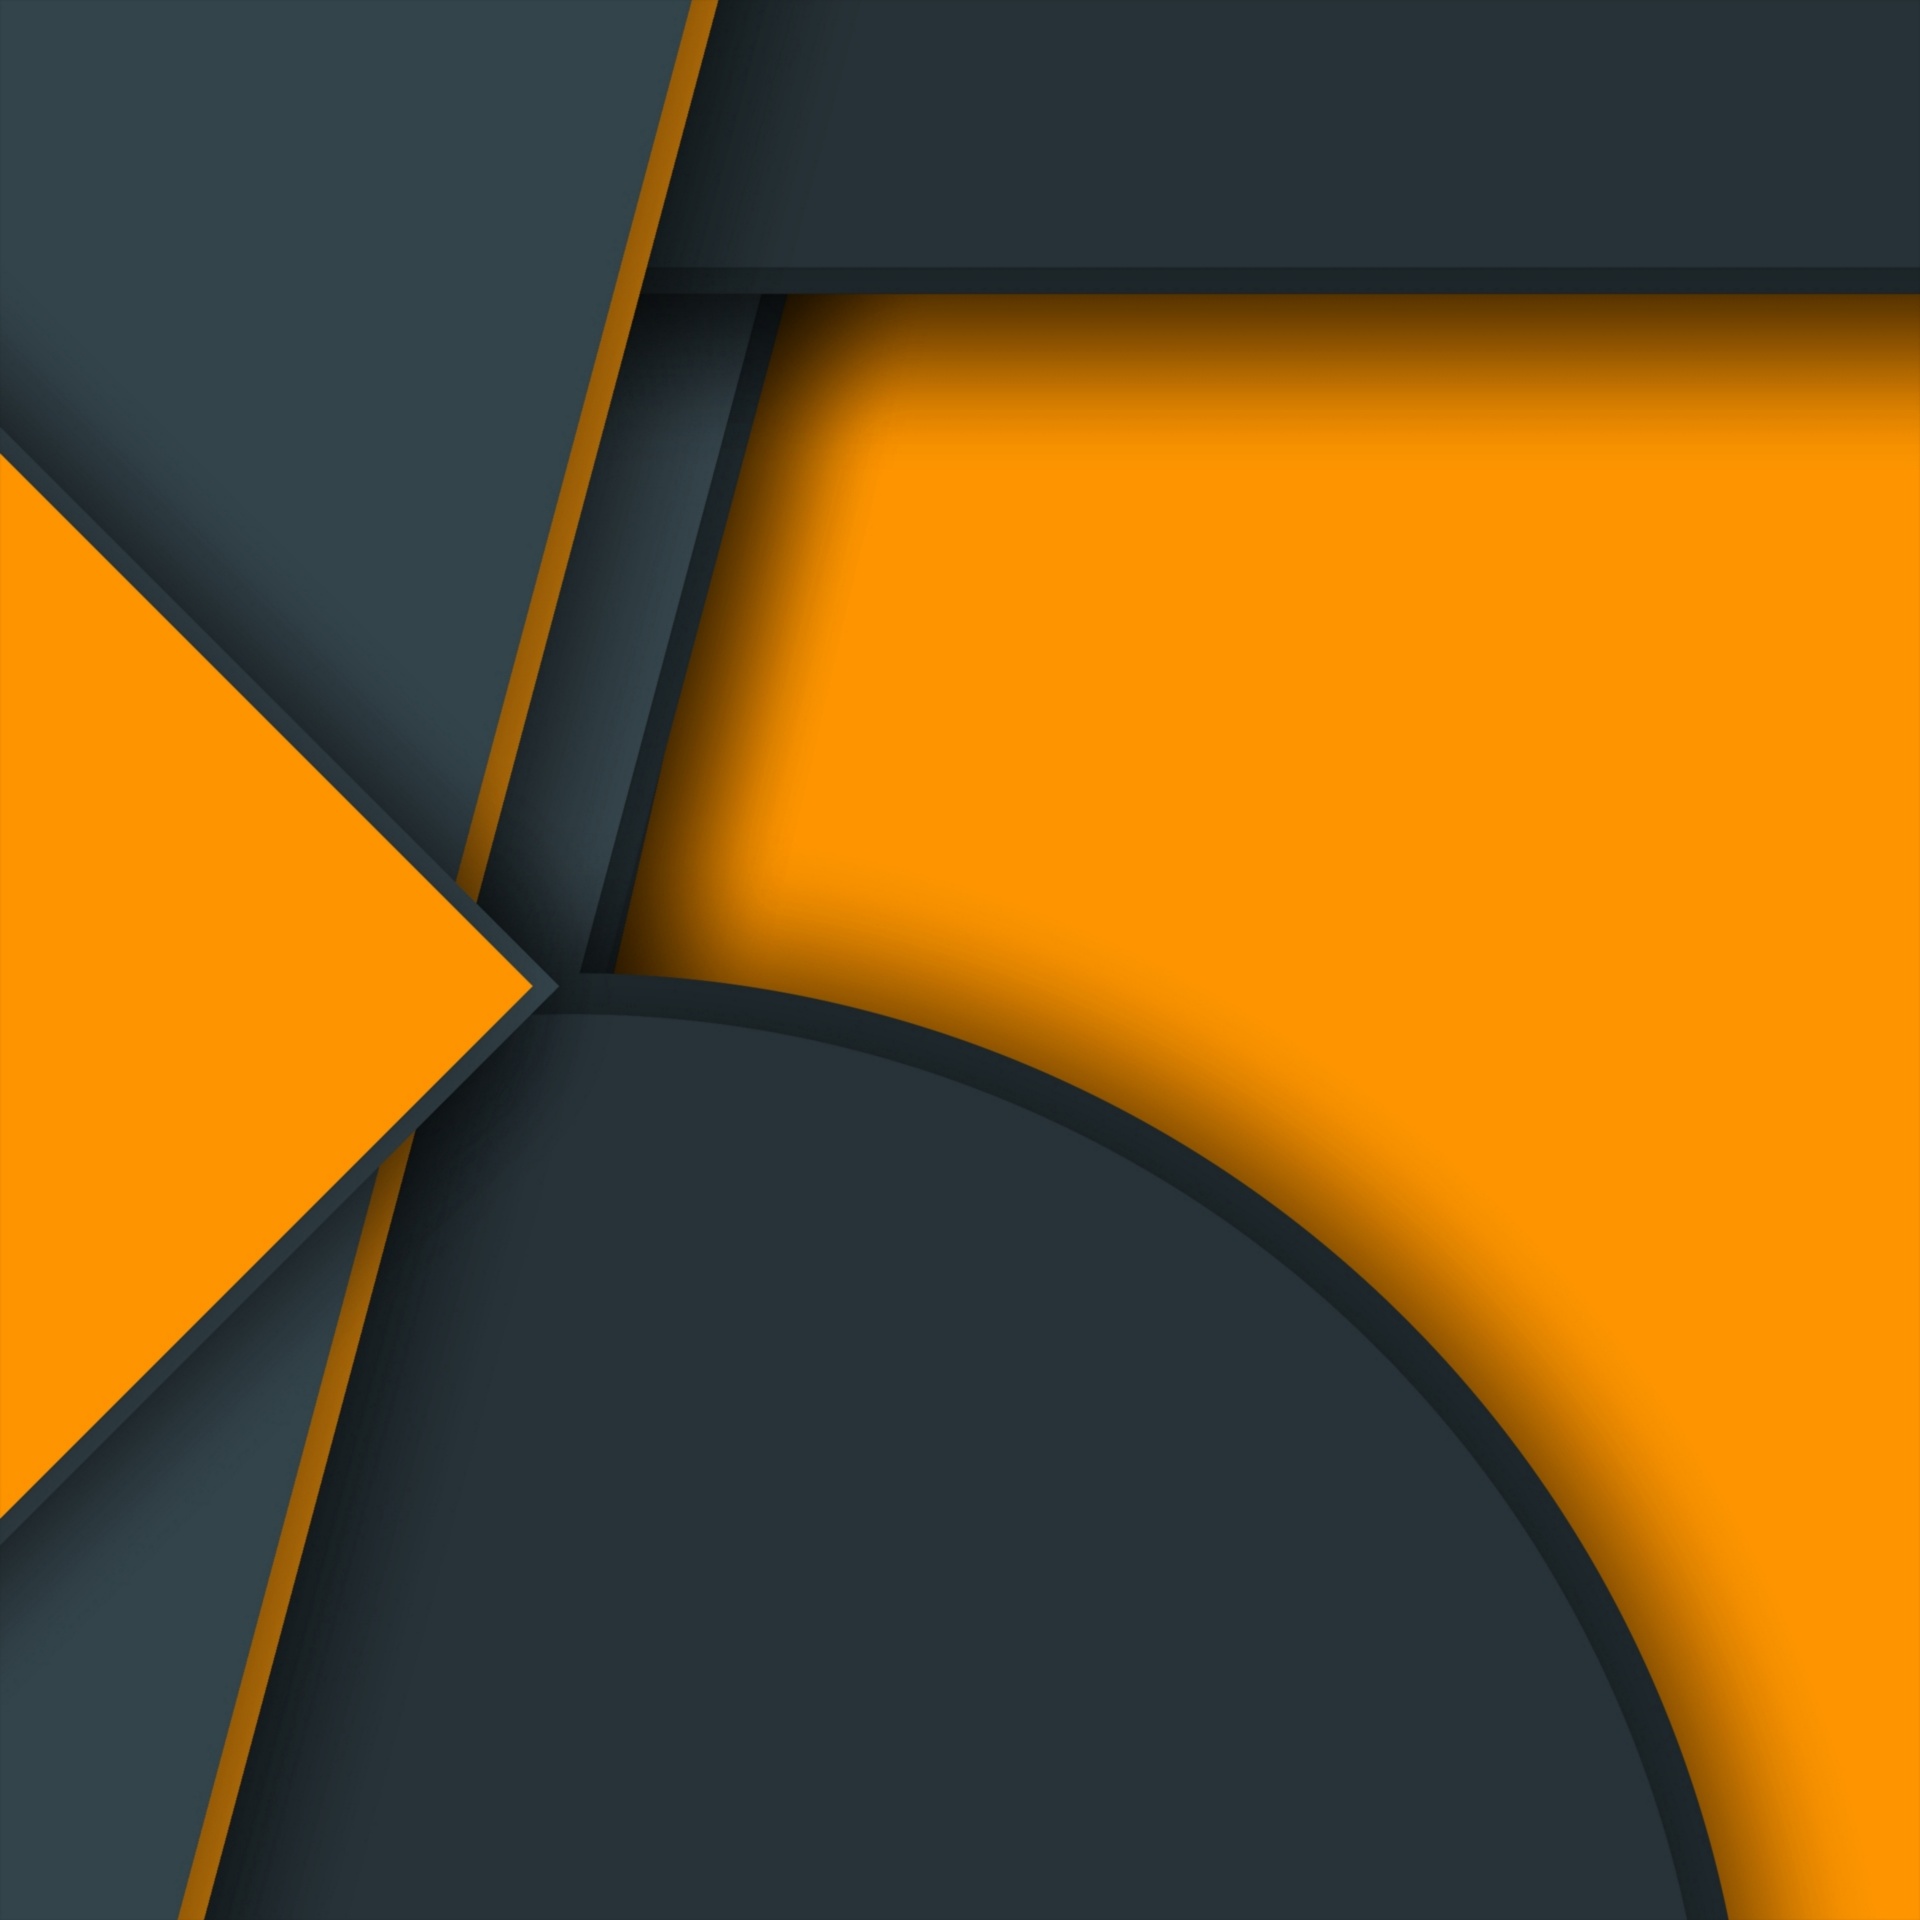 Download free photo of Wallpaper, background, orange, grey, shapes